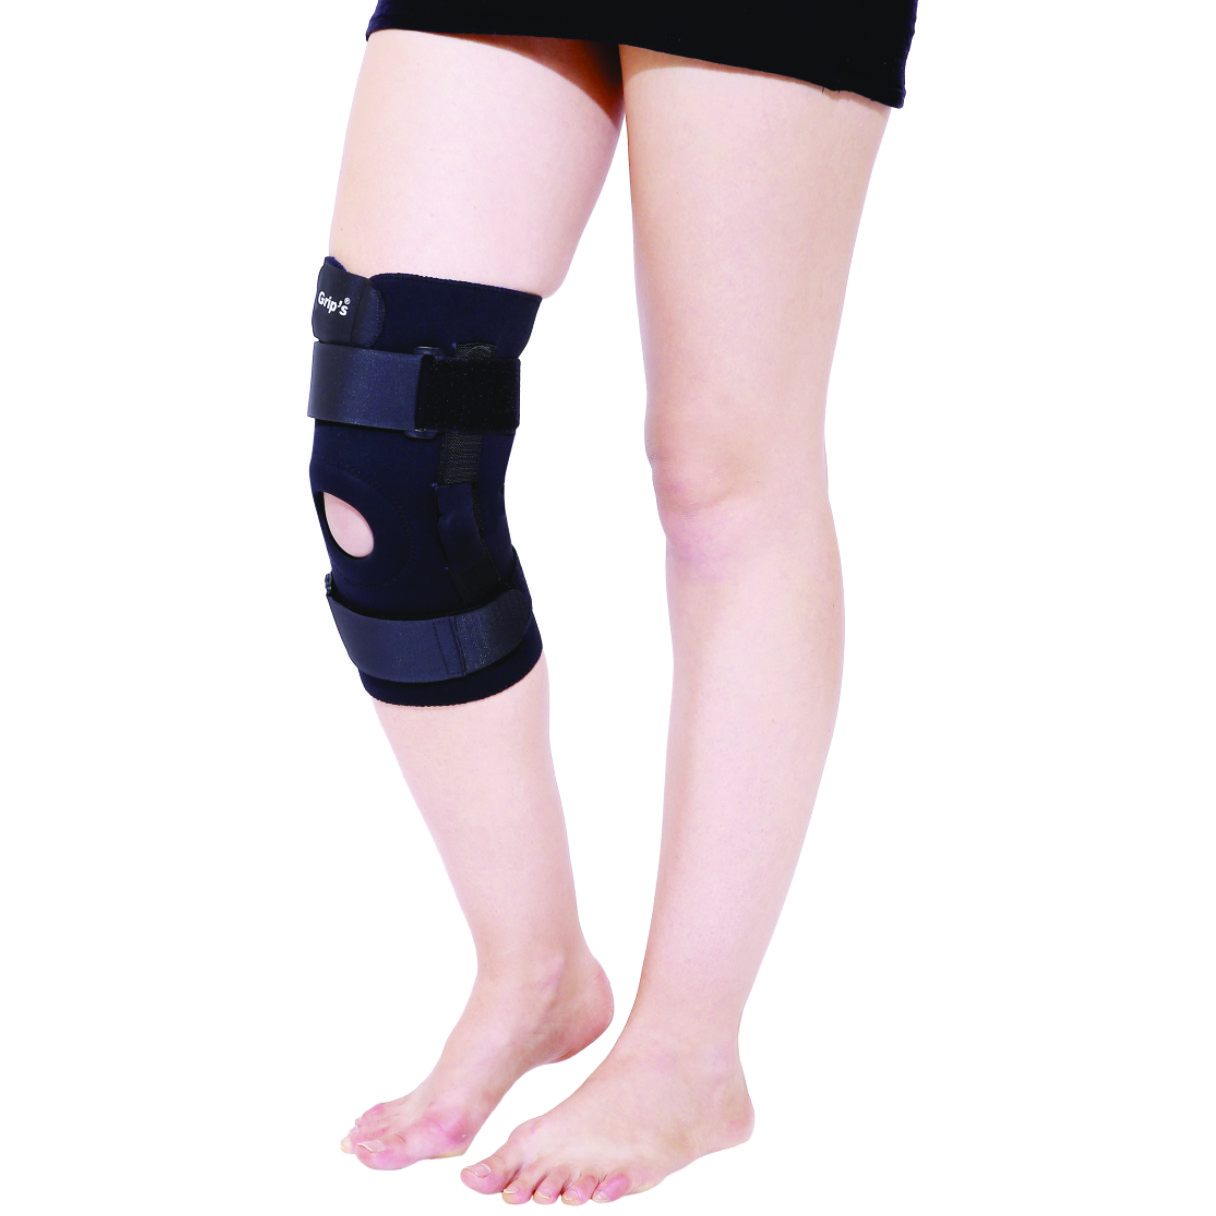 Osteo Knee Stabilizer